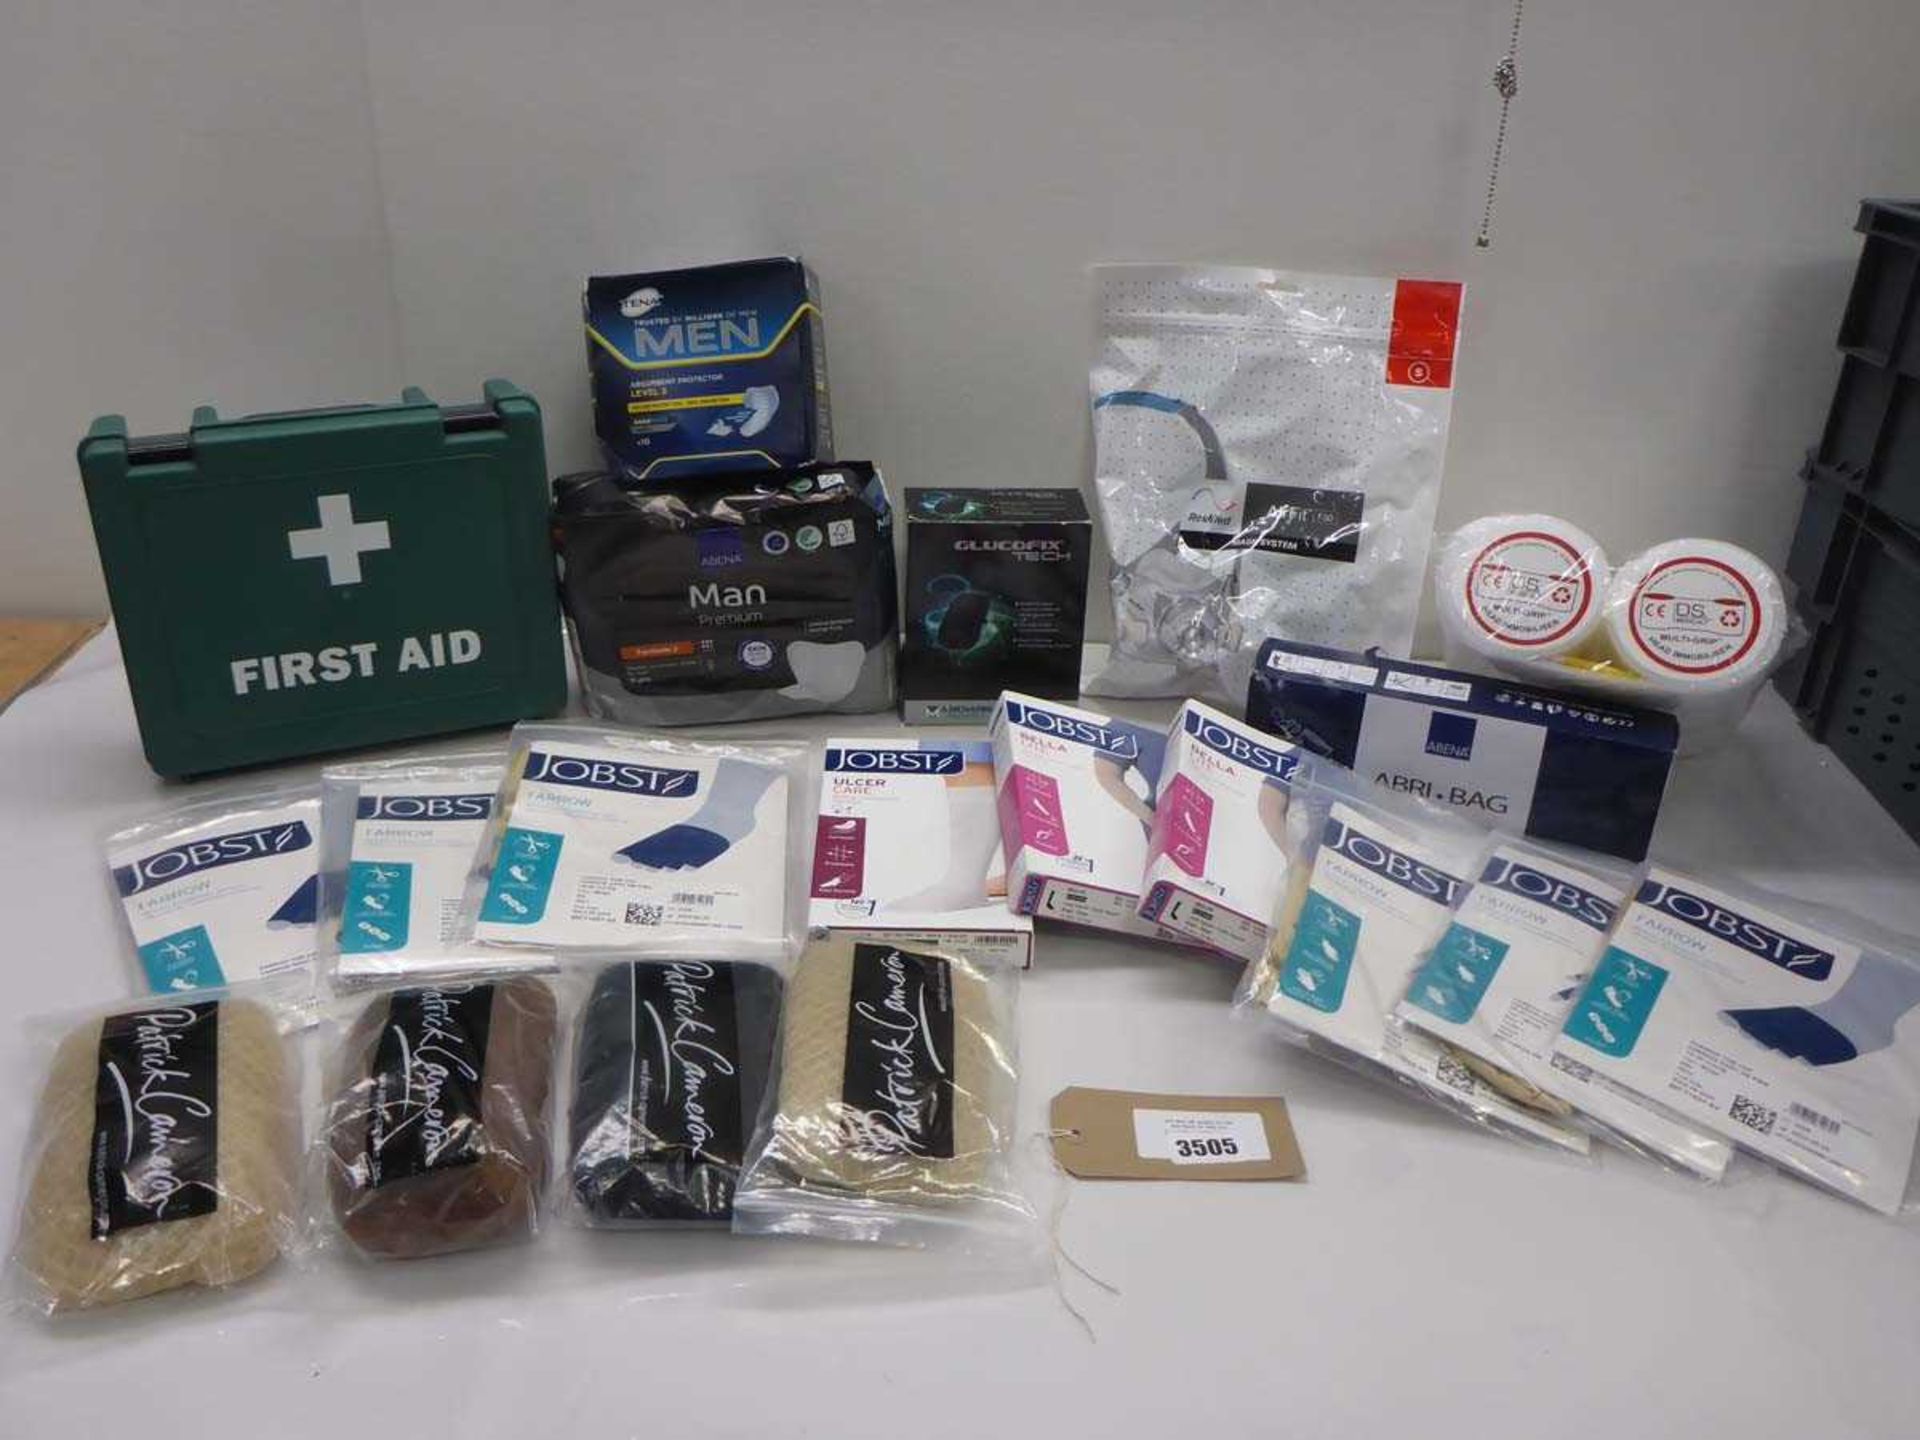 +VAT Medical arm & feet compression garments, First Aid kit, GlucoFix Tech monitor, Abri bag, Head